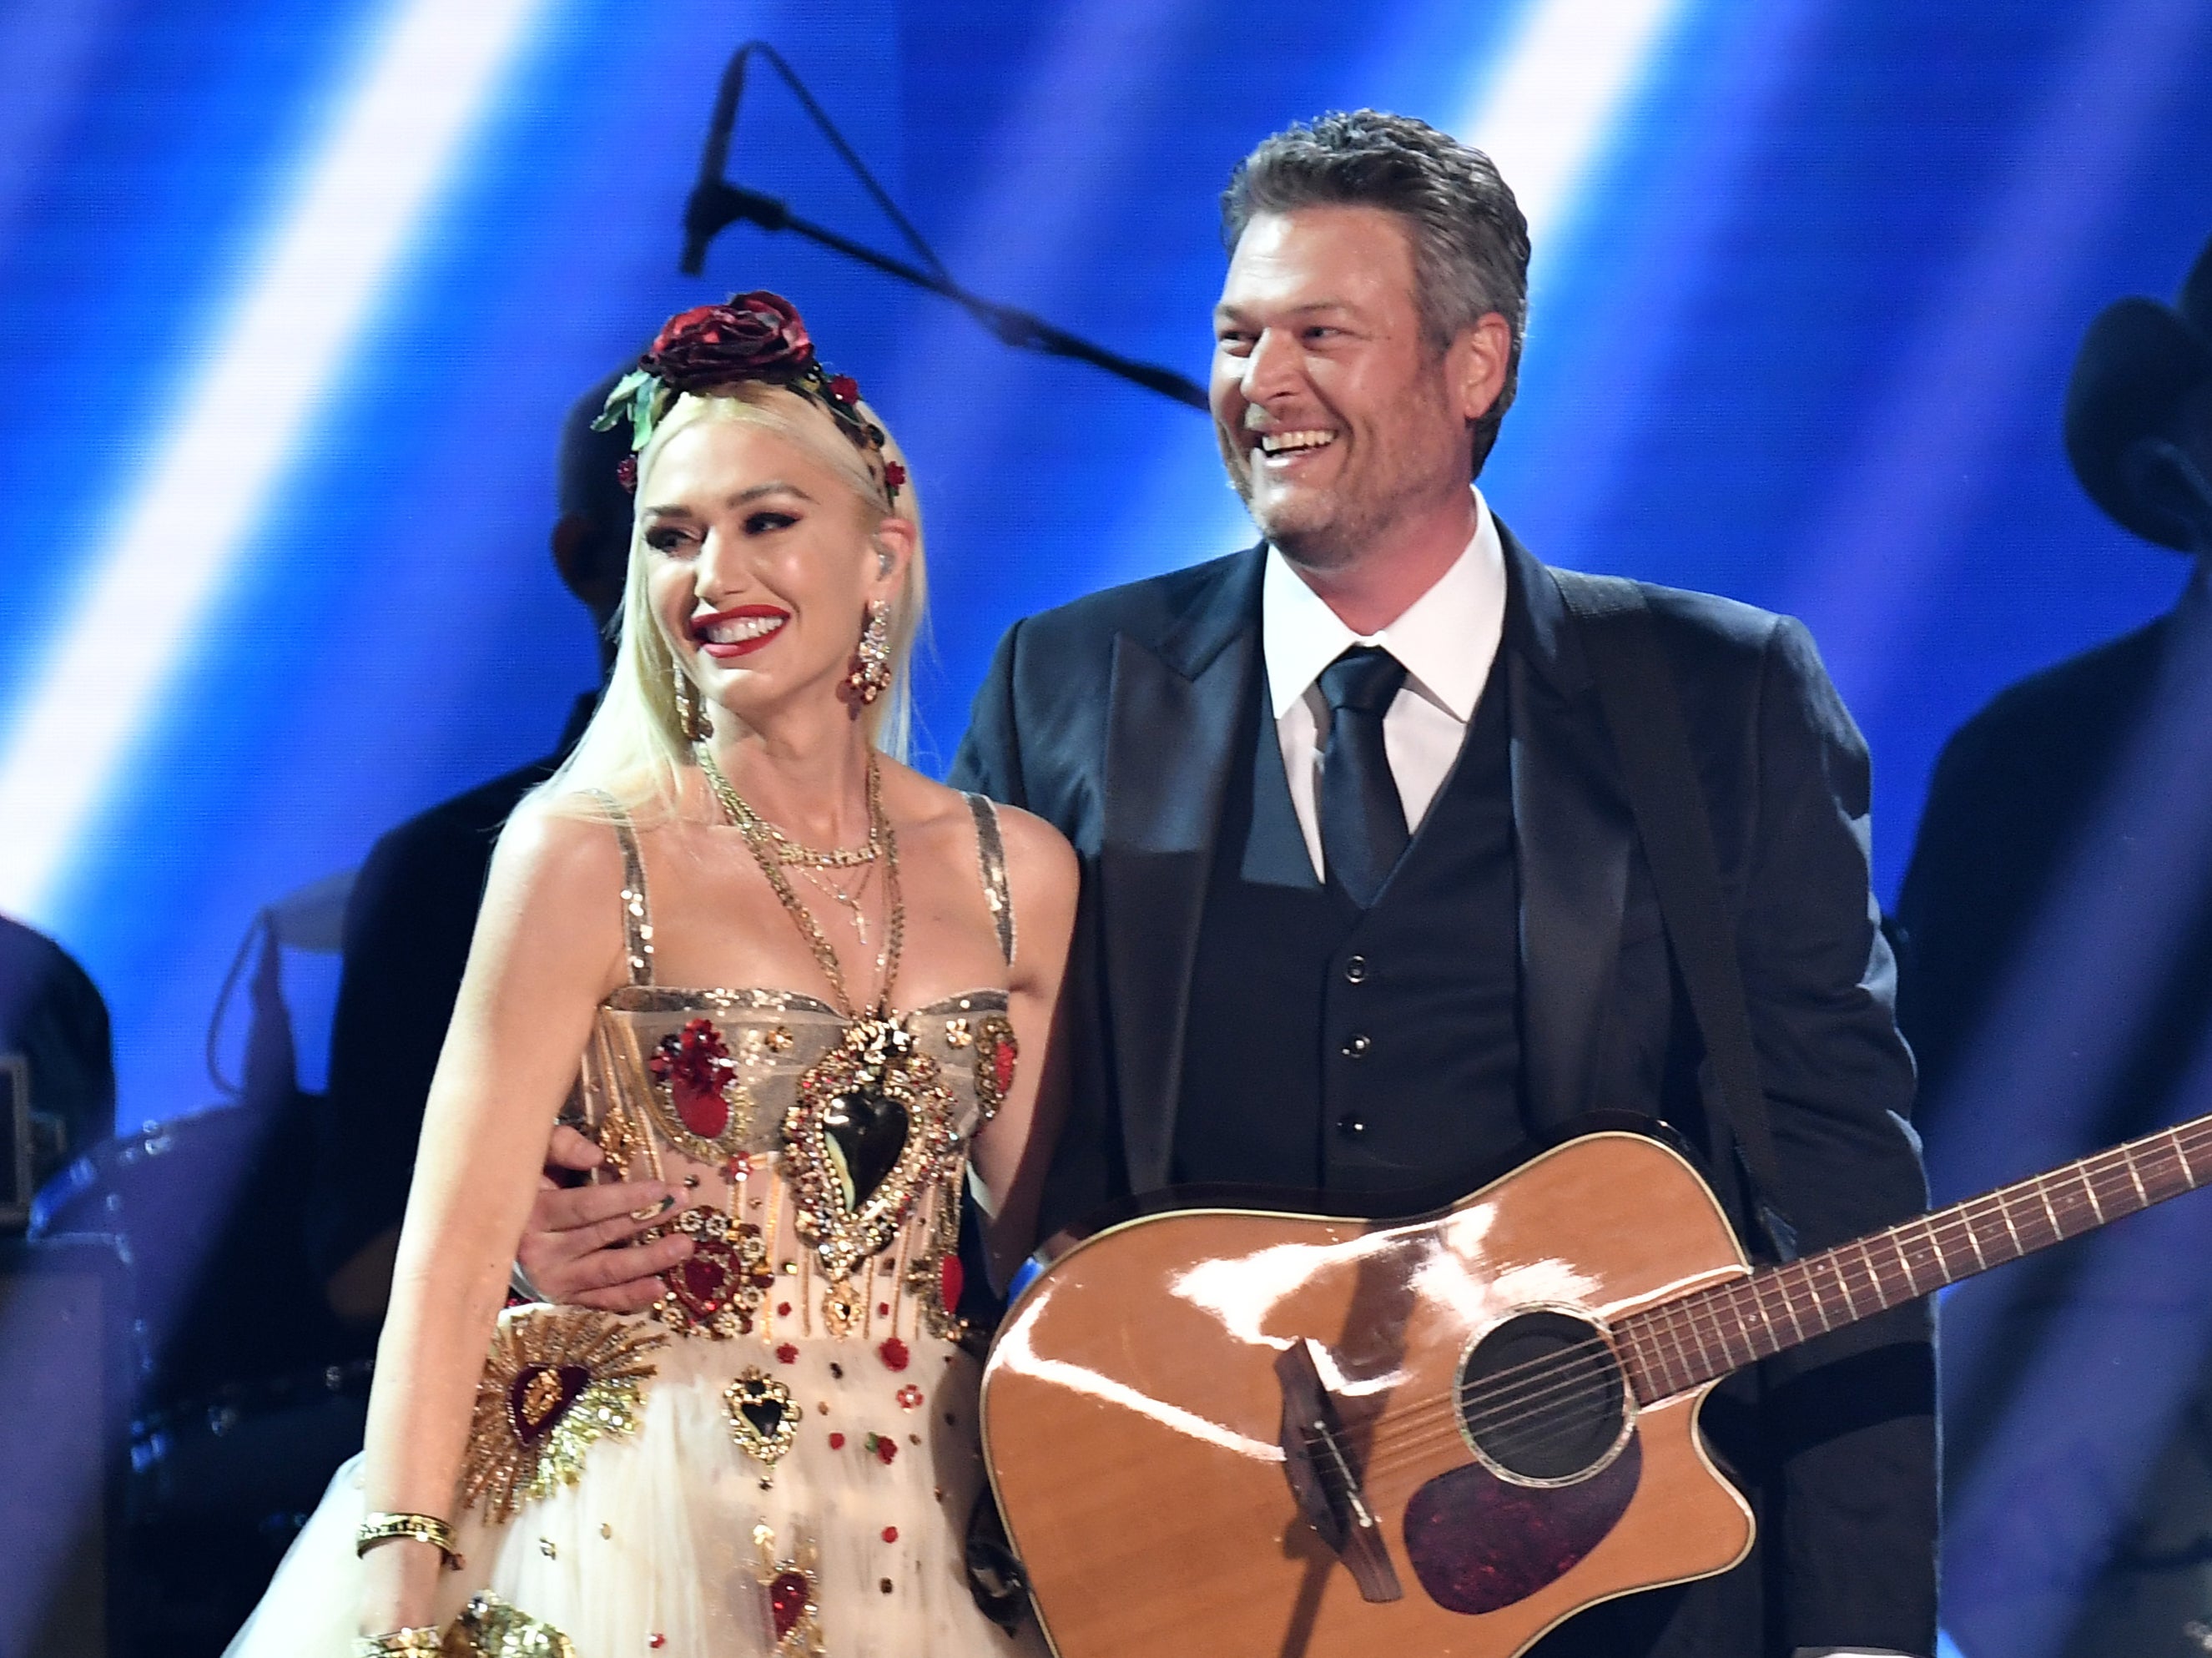 Gwen Stefani and Blake Shelton at the 62nd Annual Grammy Awards